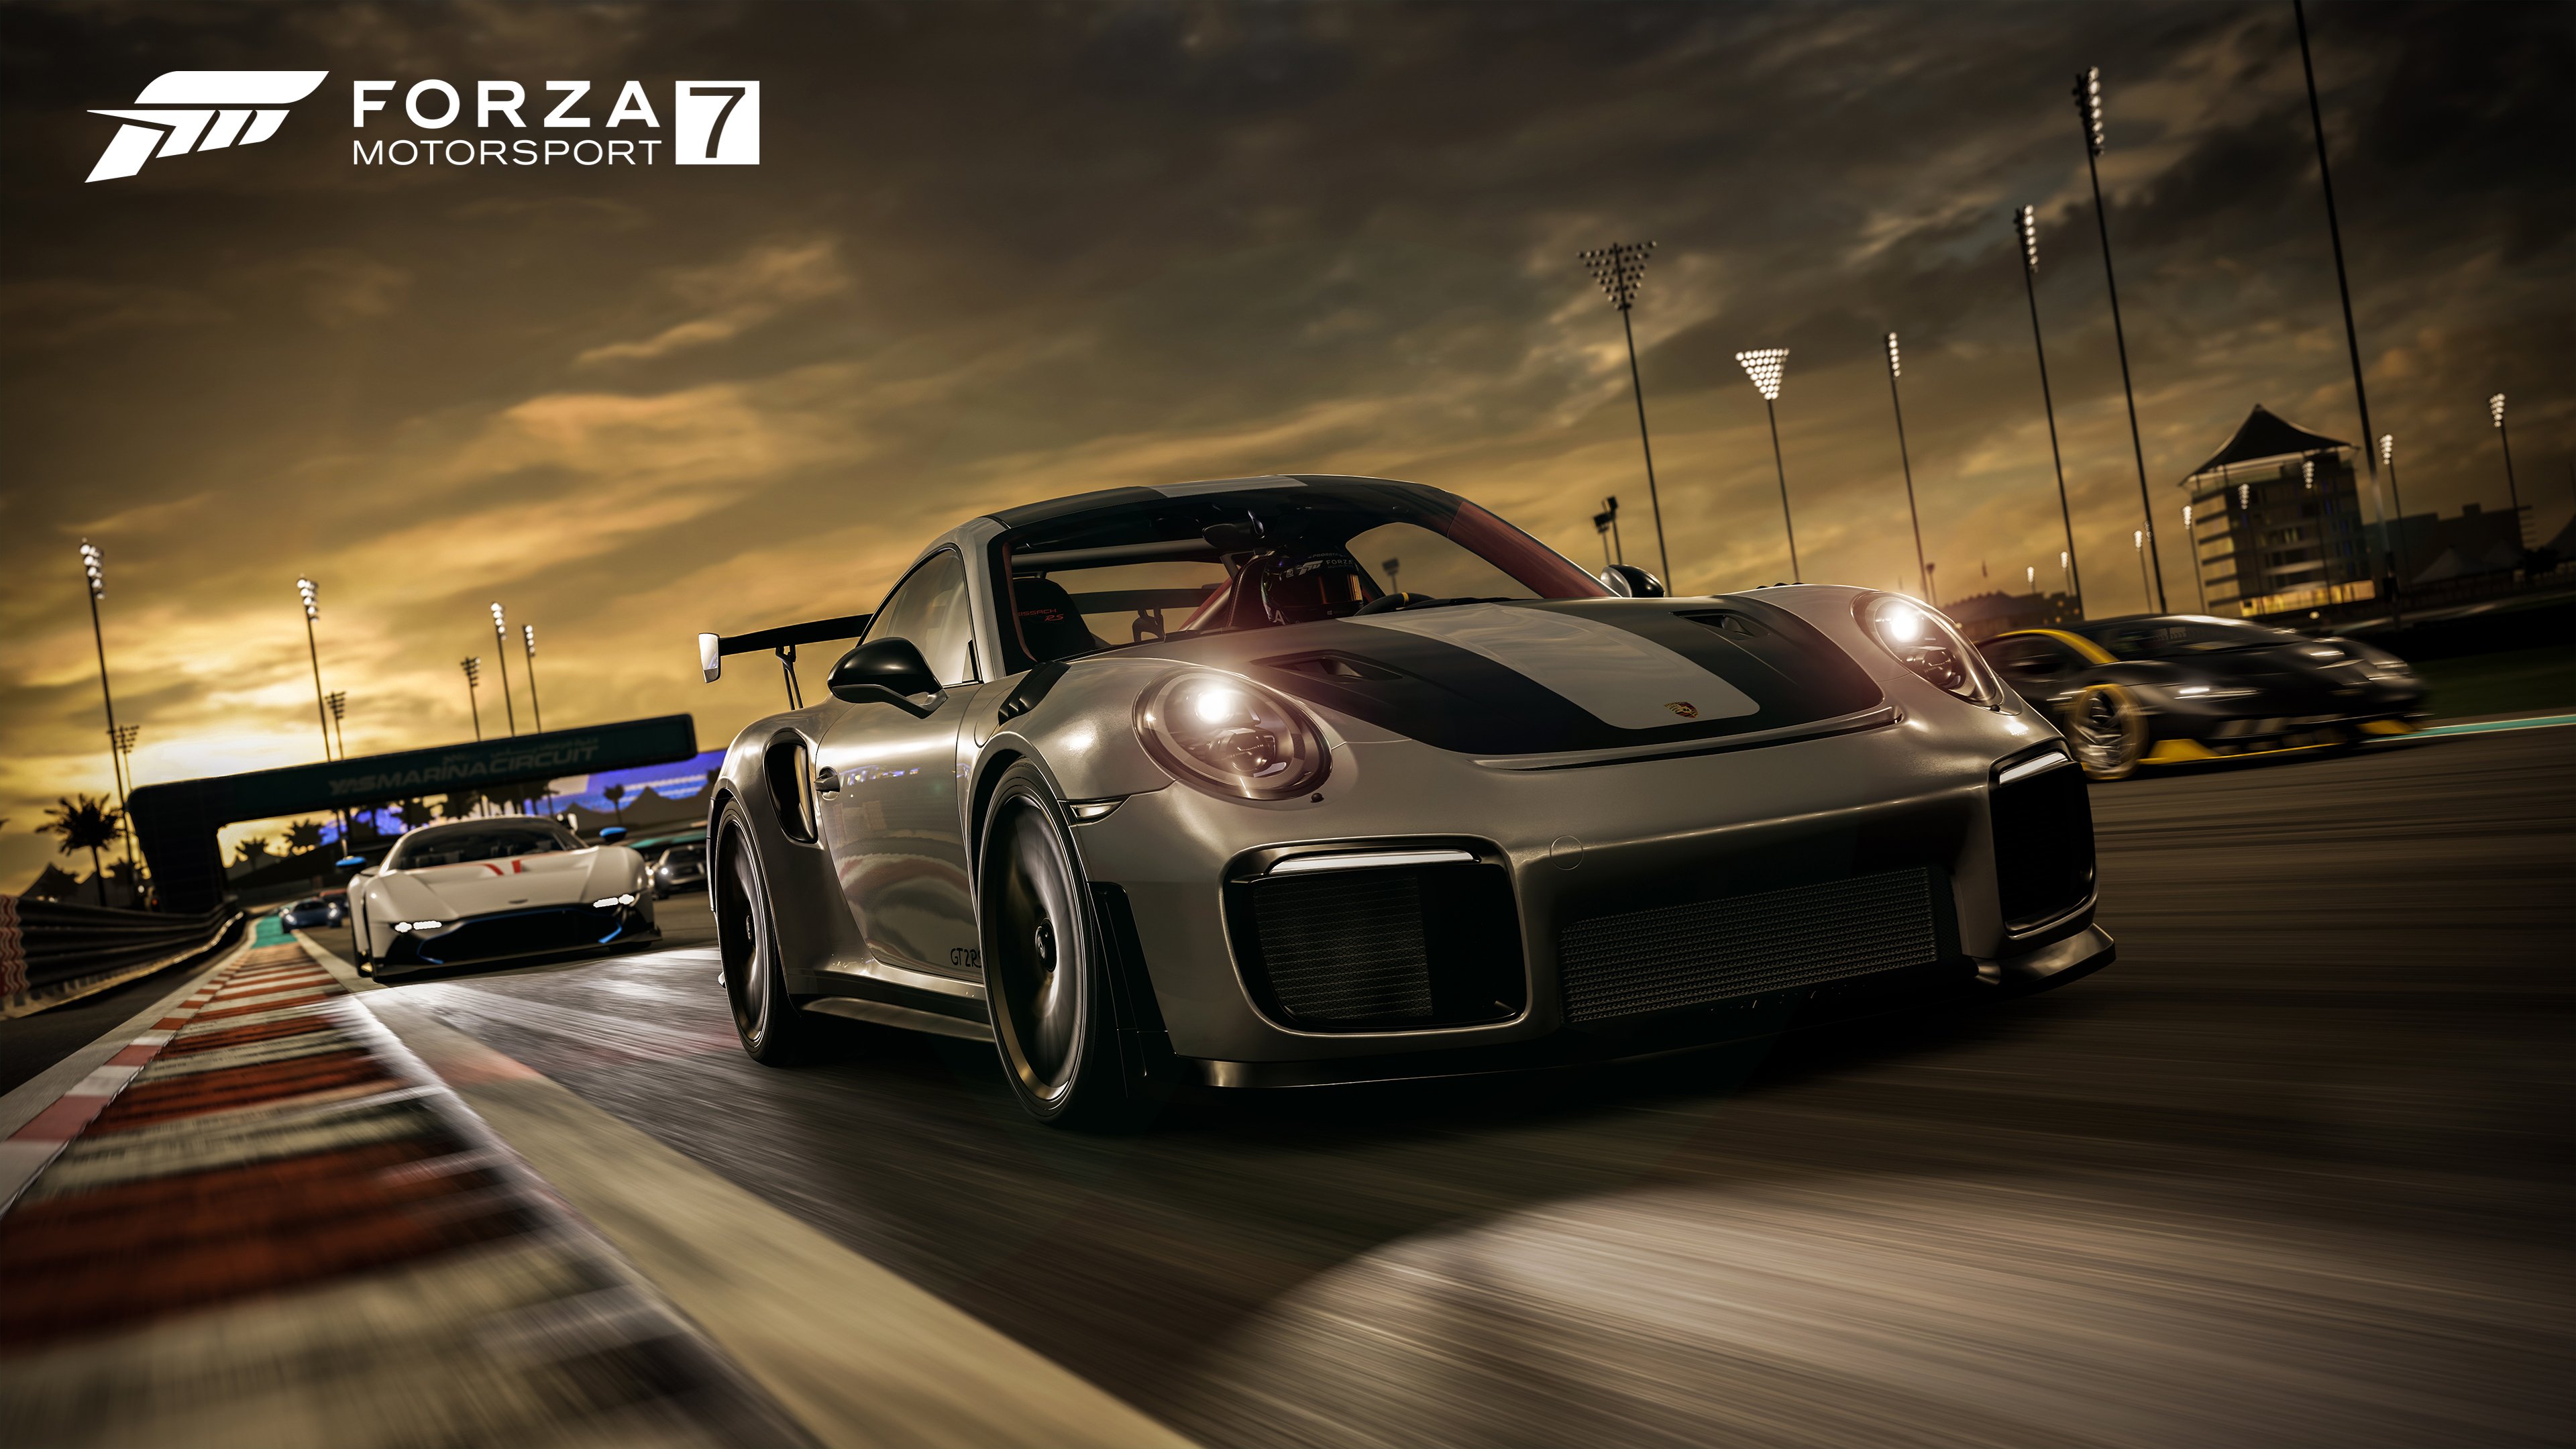 Forza7_Gamescom_PressKit_PorscheInTheLead_4K1.jpg